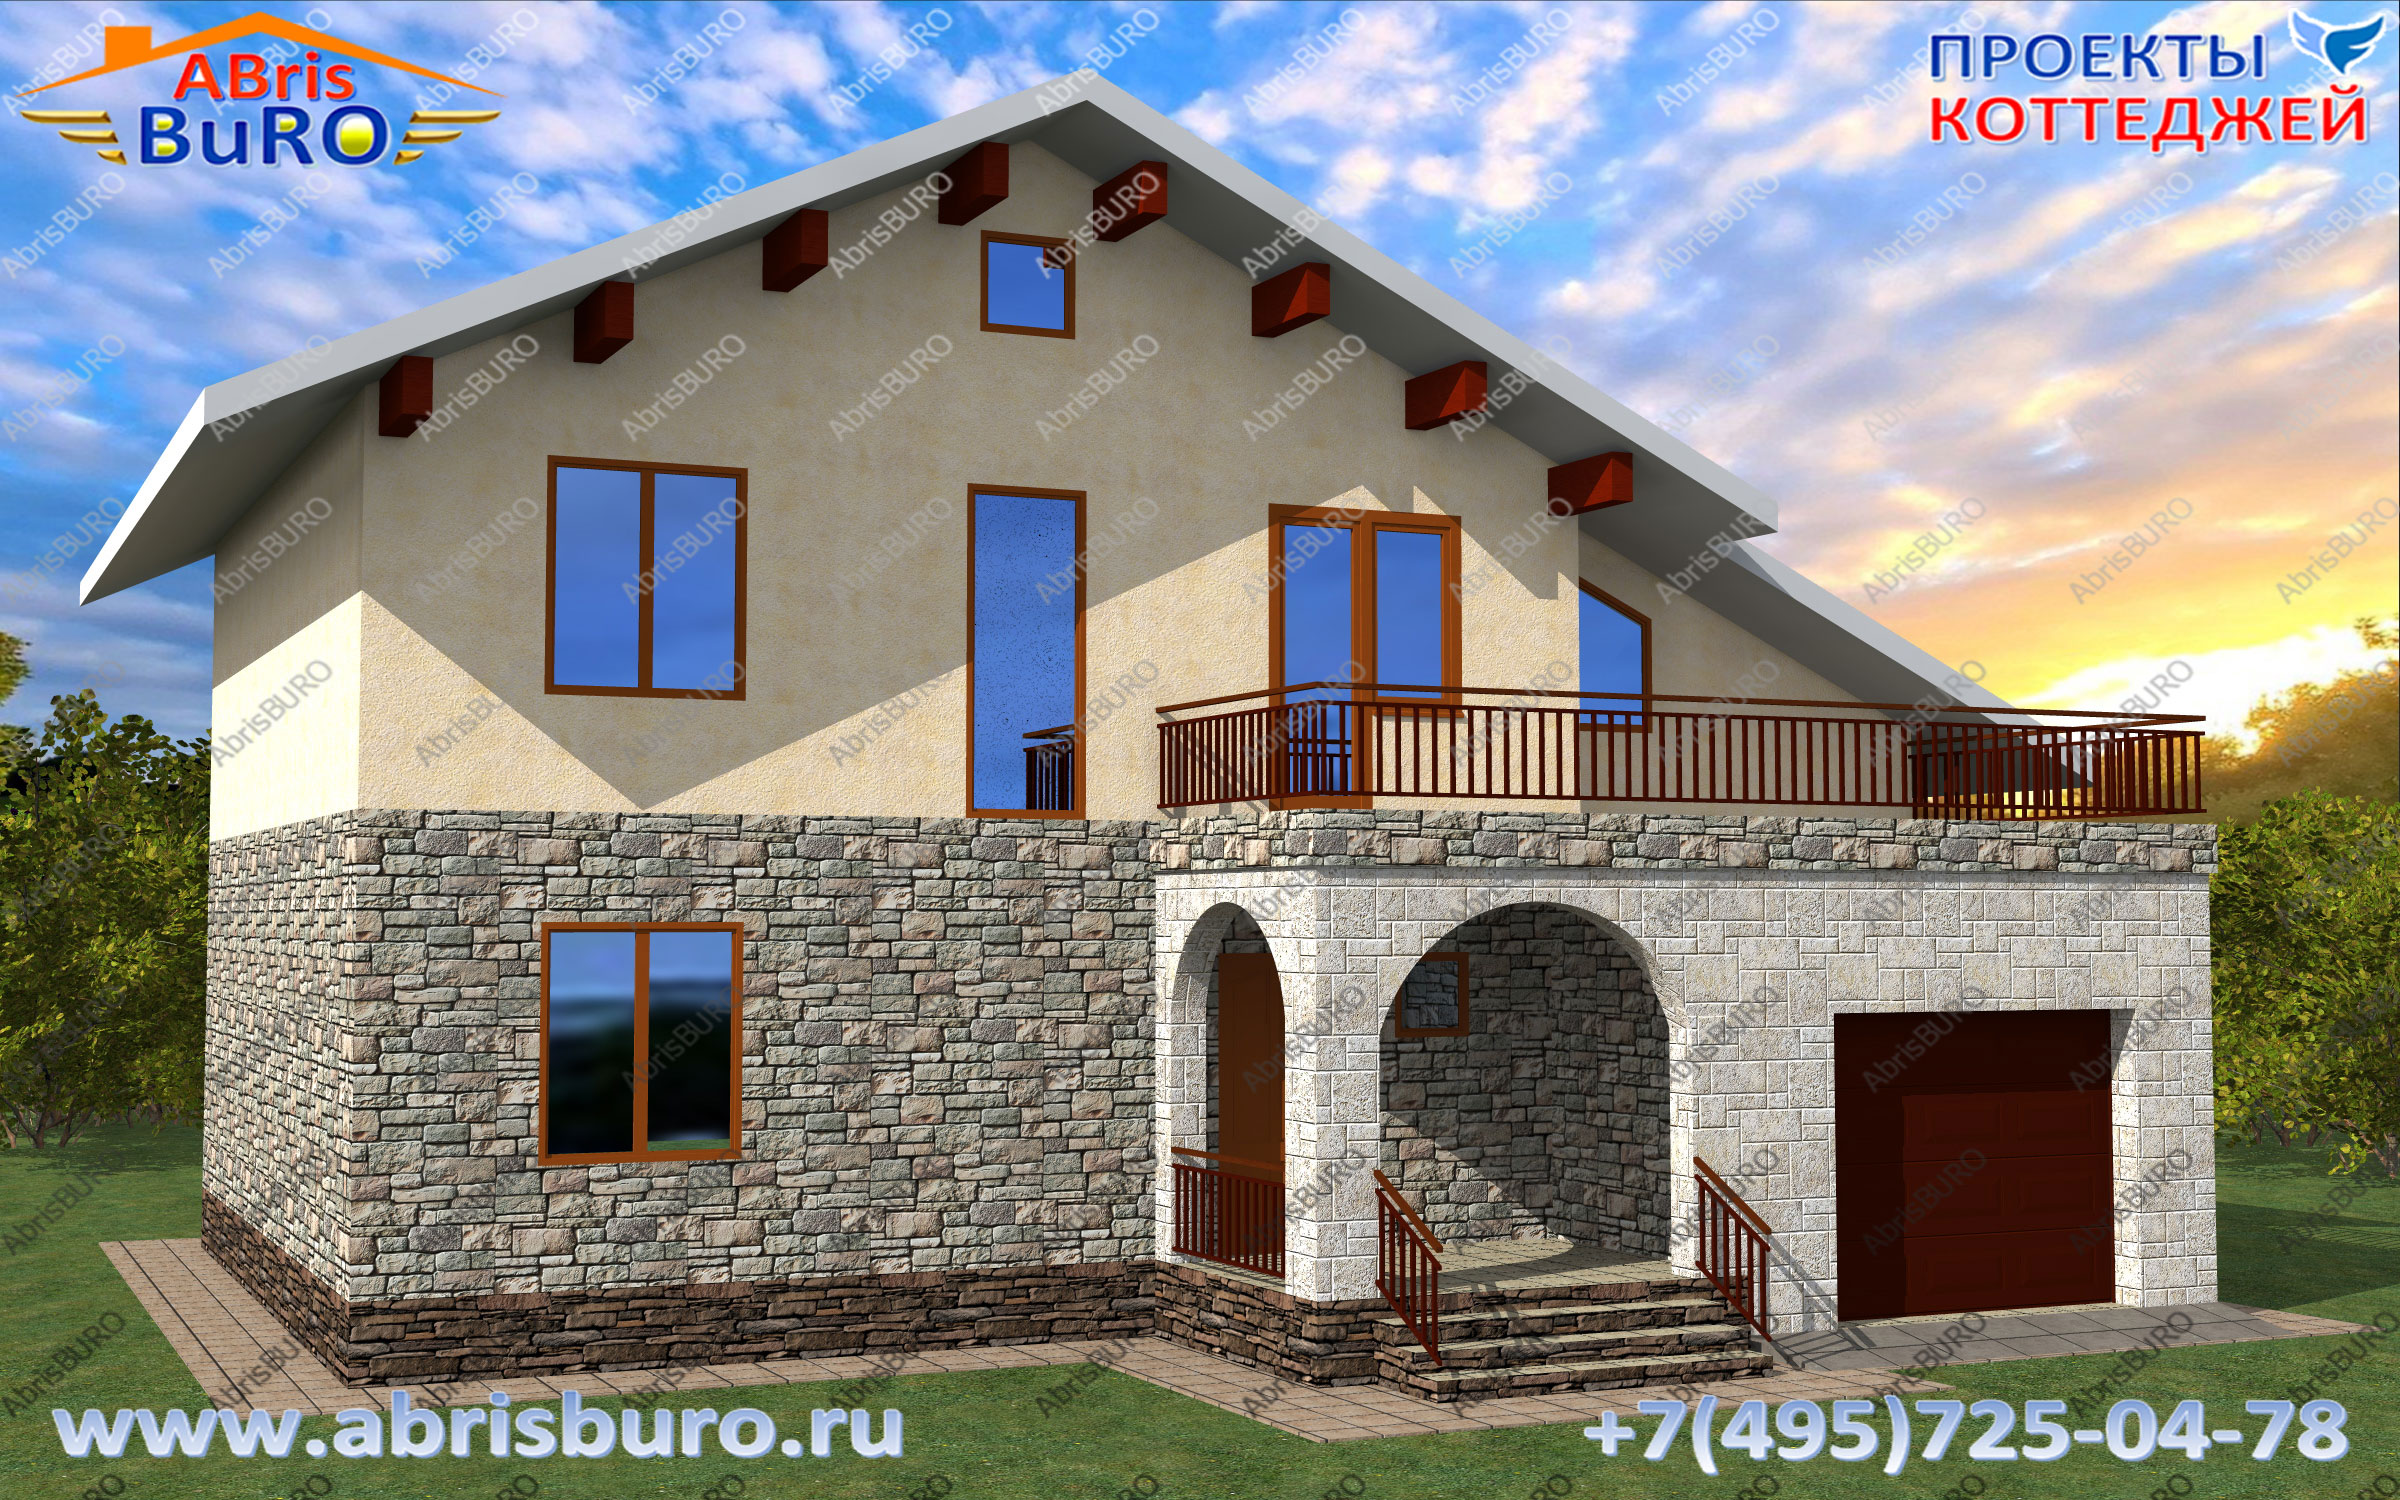 K2127-227 Проект дома с гаражом, балконами и террасой на сайте www.abrisburo.ru